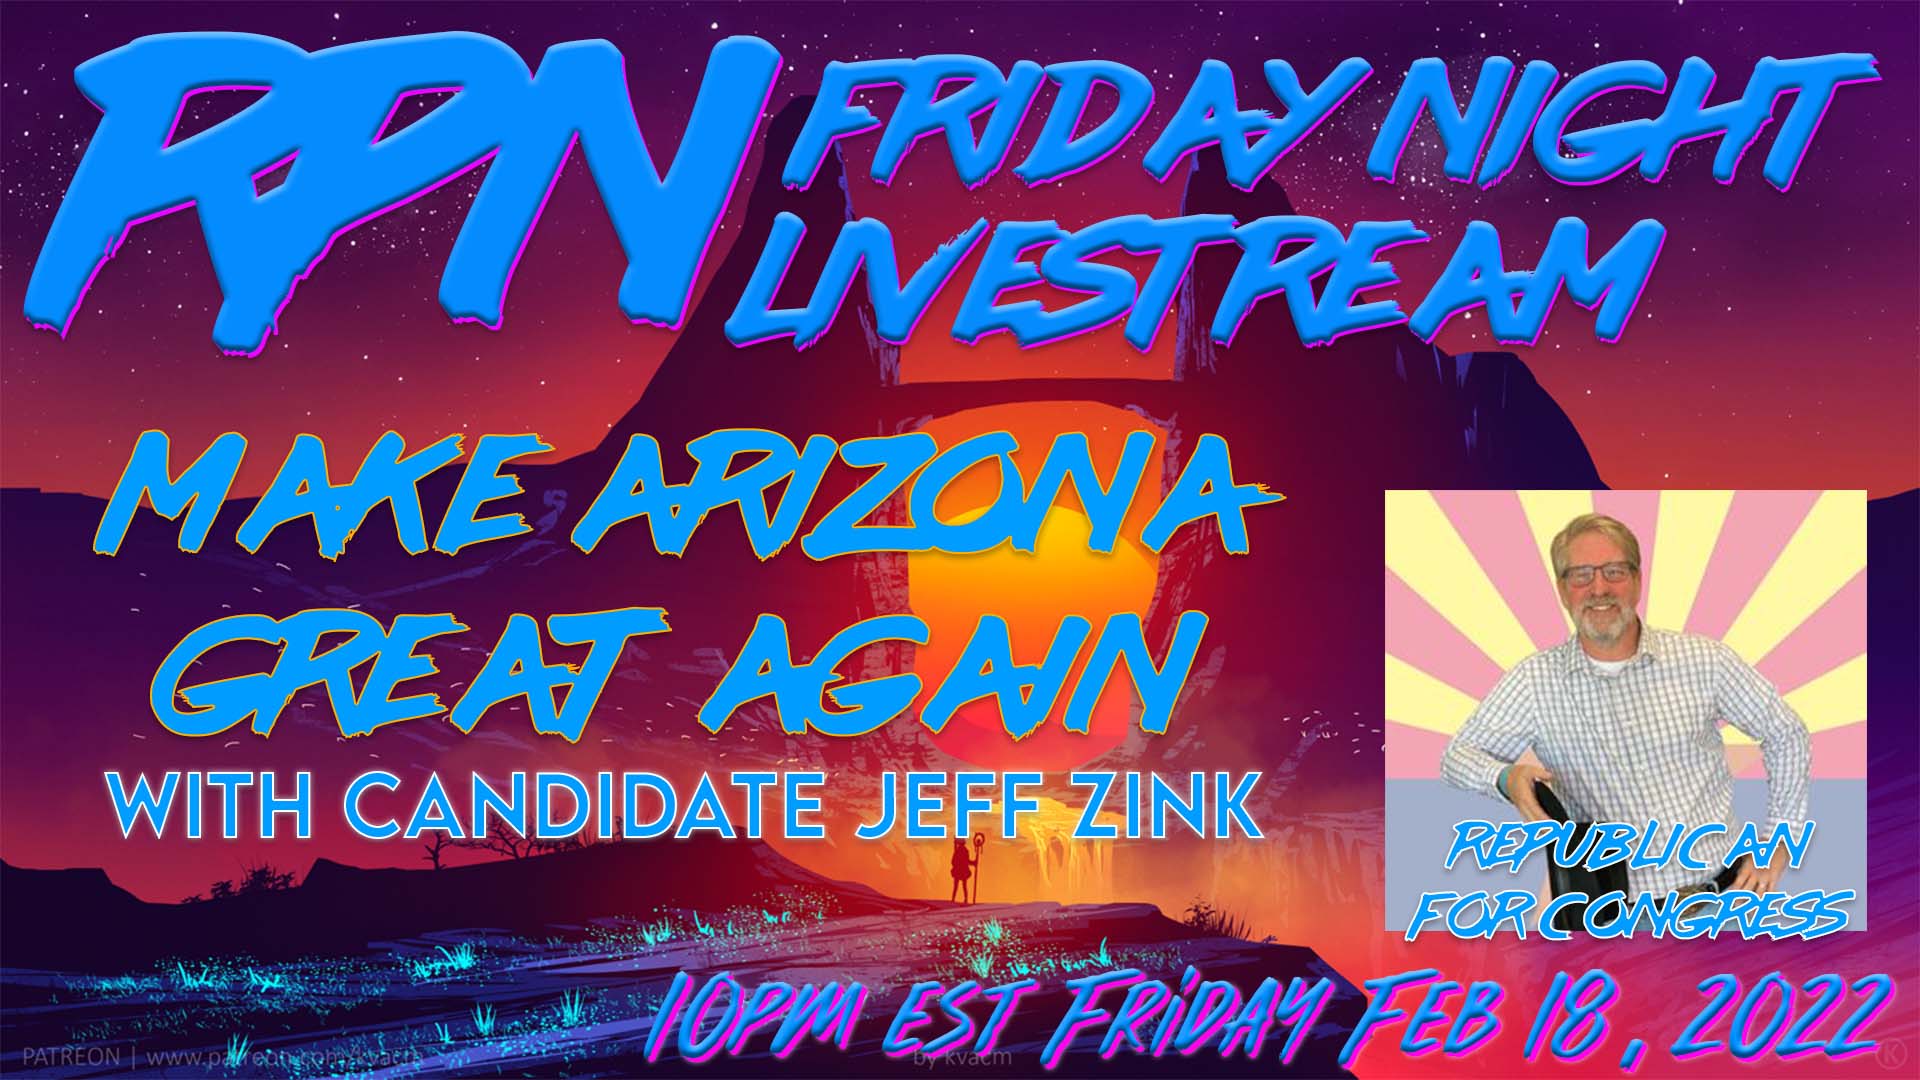 Jeff Zink 4 Congress - MAKE ARIZONA GREAT AGAIN! On Fri. Night Livestream